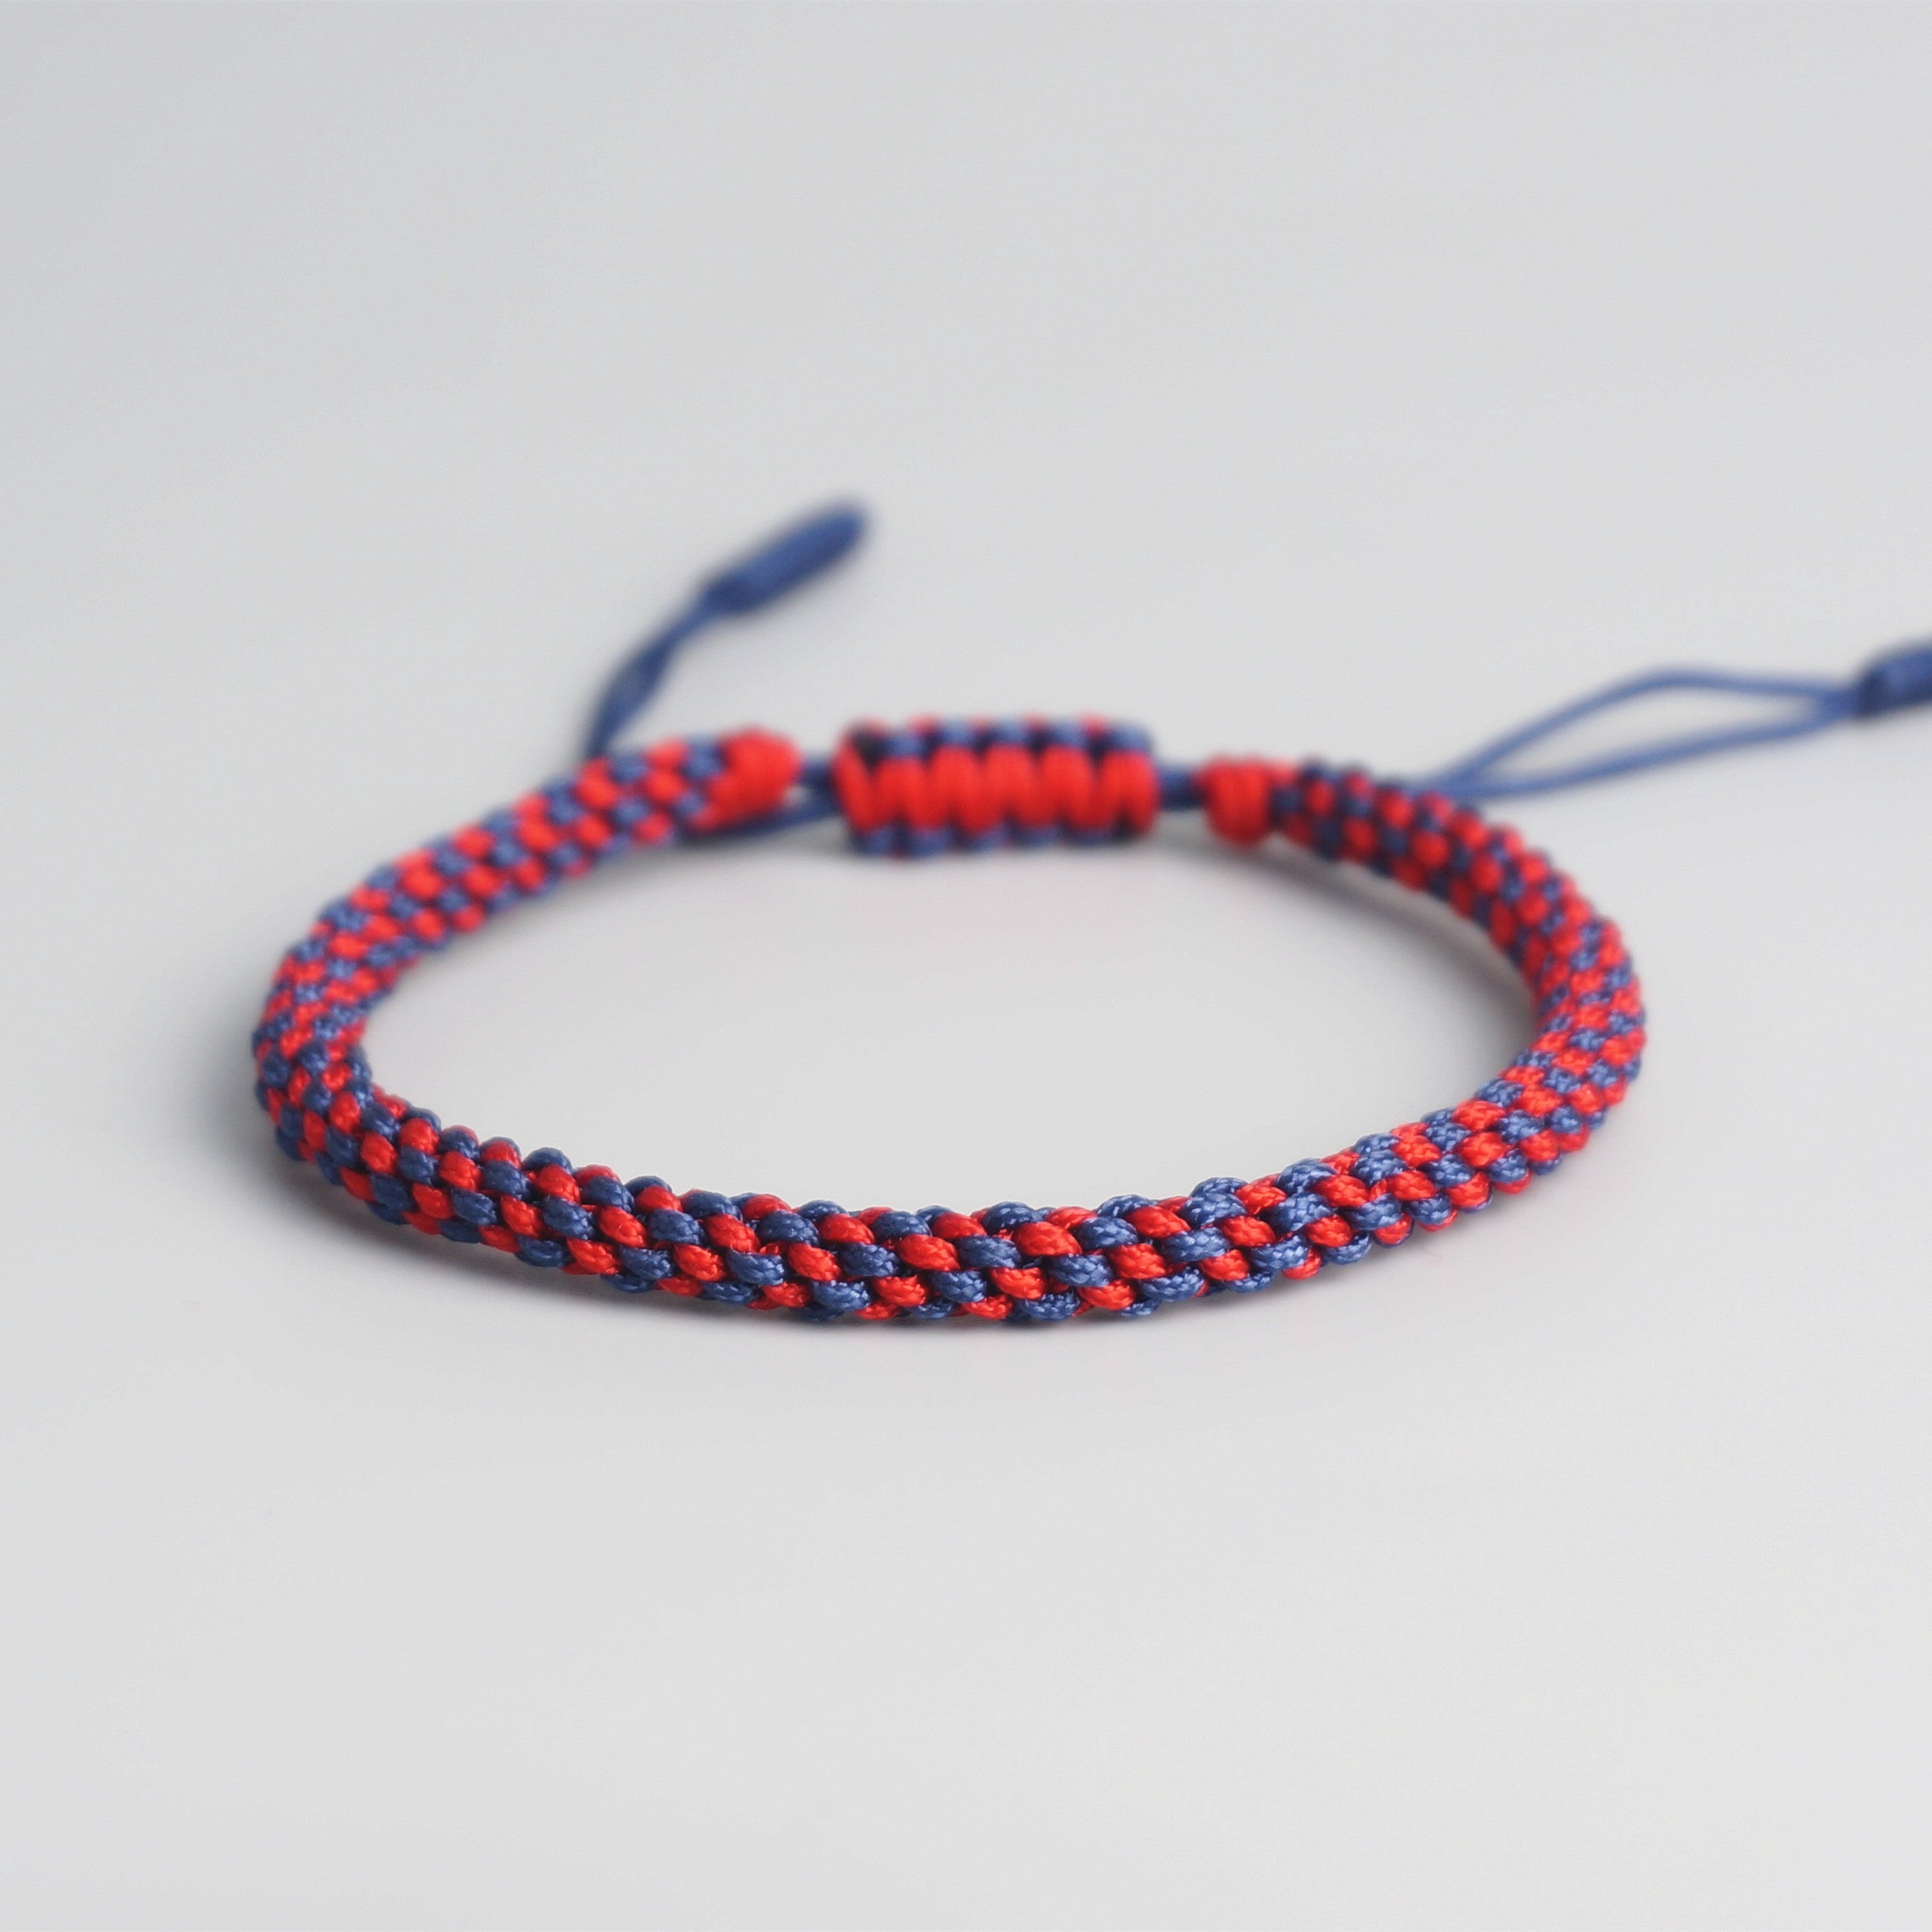 Handmade Tibetan Blessed Knots for "Love ❤️, Contentedness & Healing"